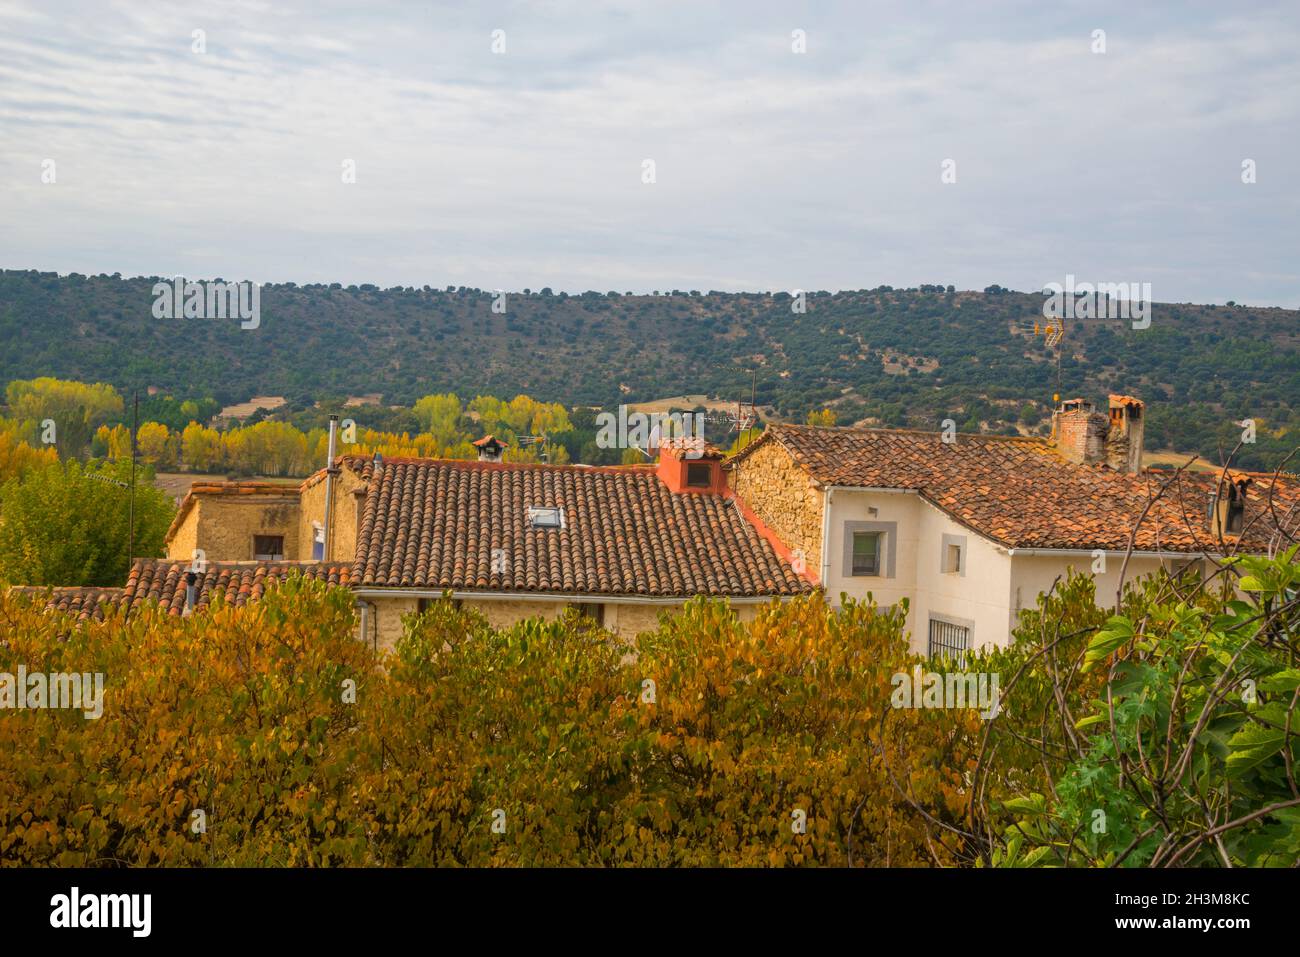 Houses and landscape. Cañada del Hoyo, Cuenca province, Castilla La Mancha, Spain. Stock Photo